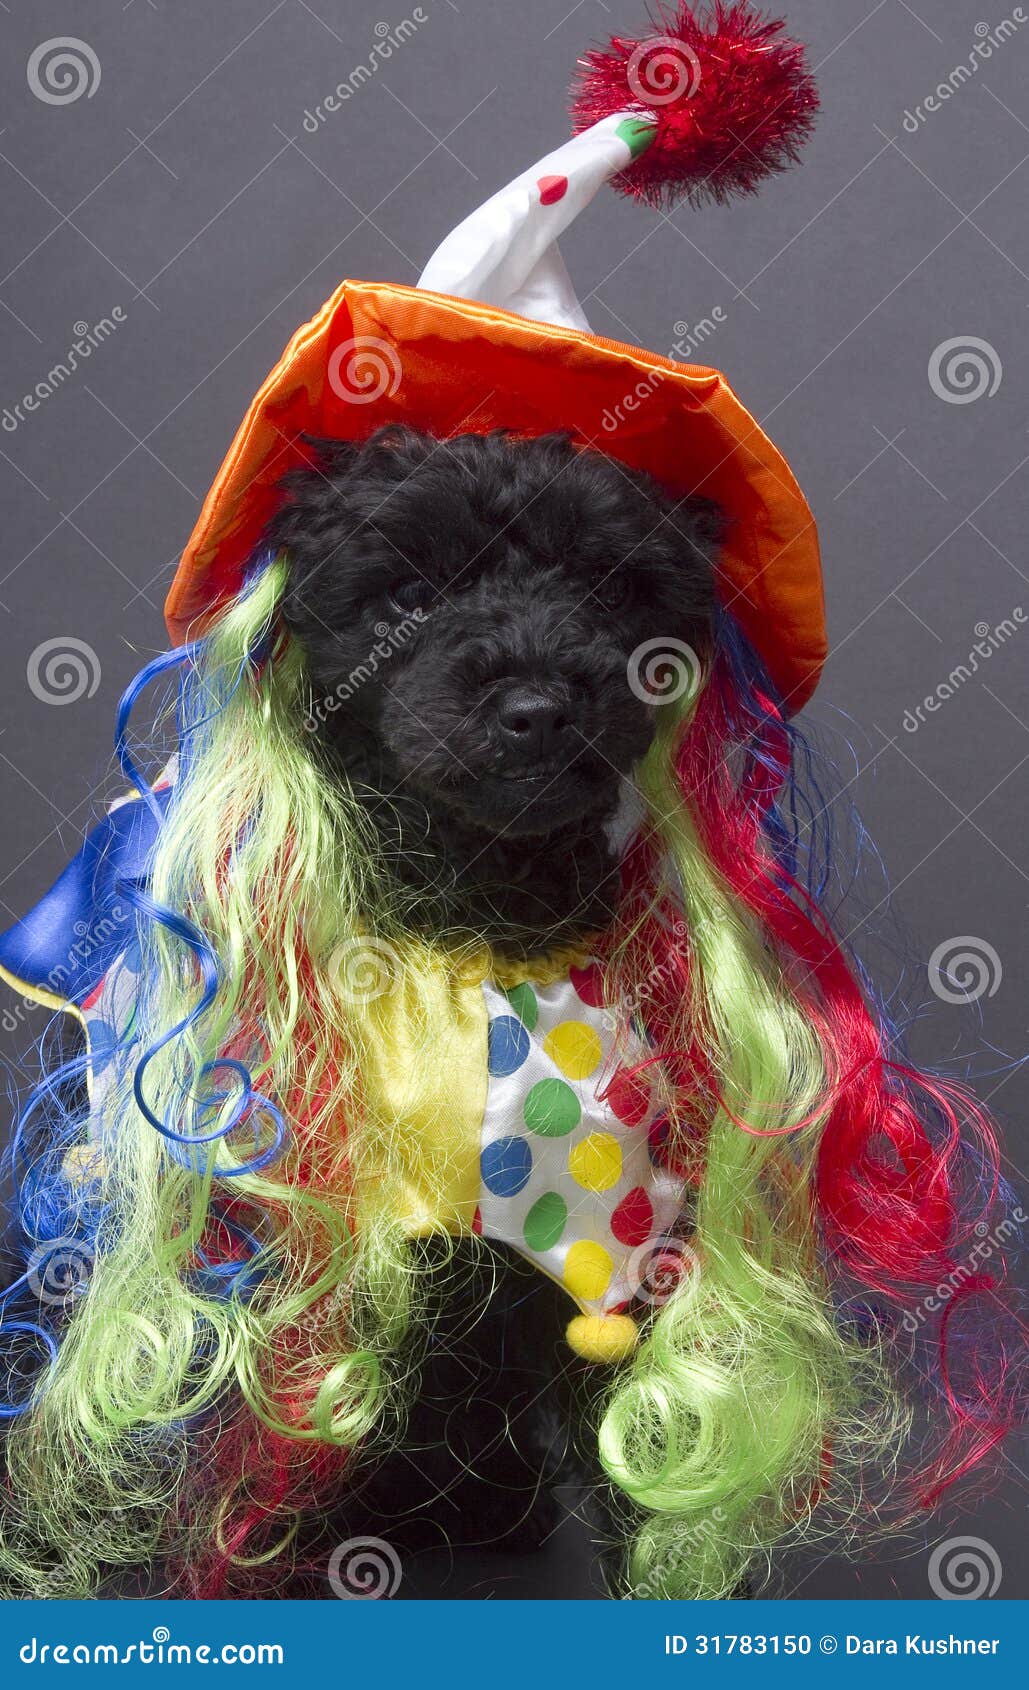 [Image: crazy-clown-dog-poodle-rainbow-wig-costu...783150.jpg]